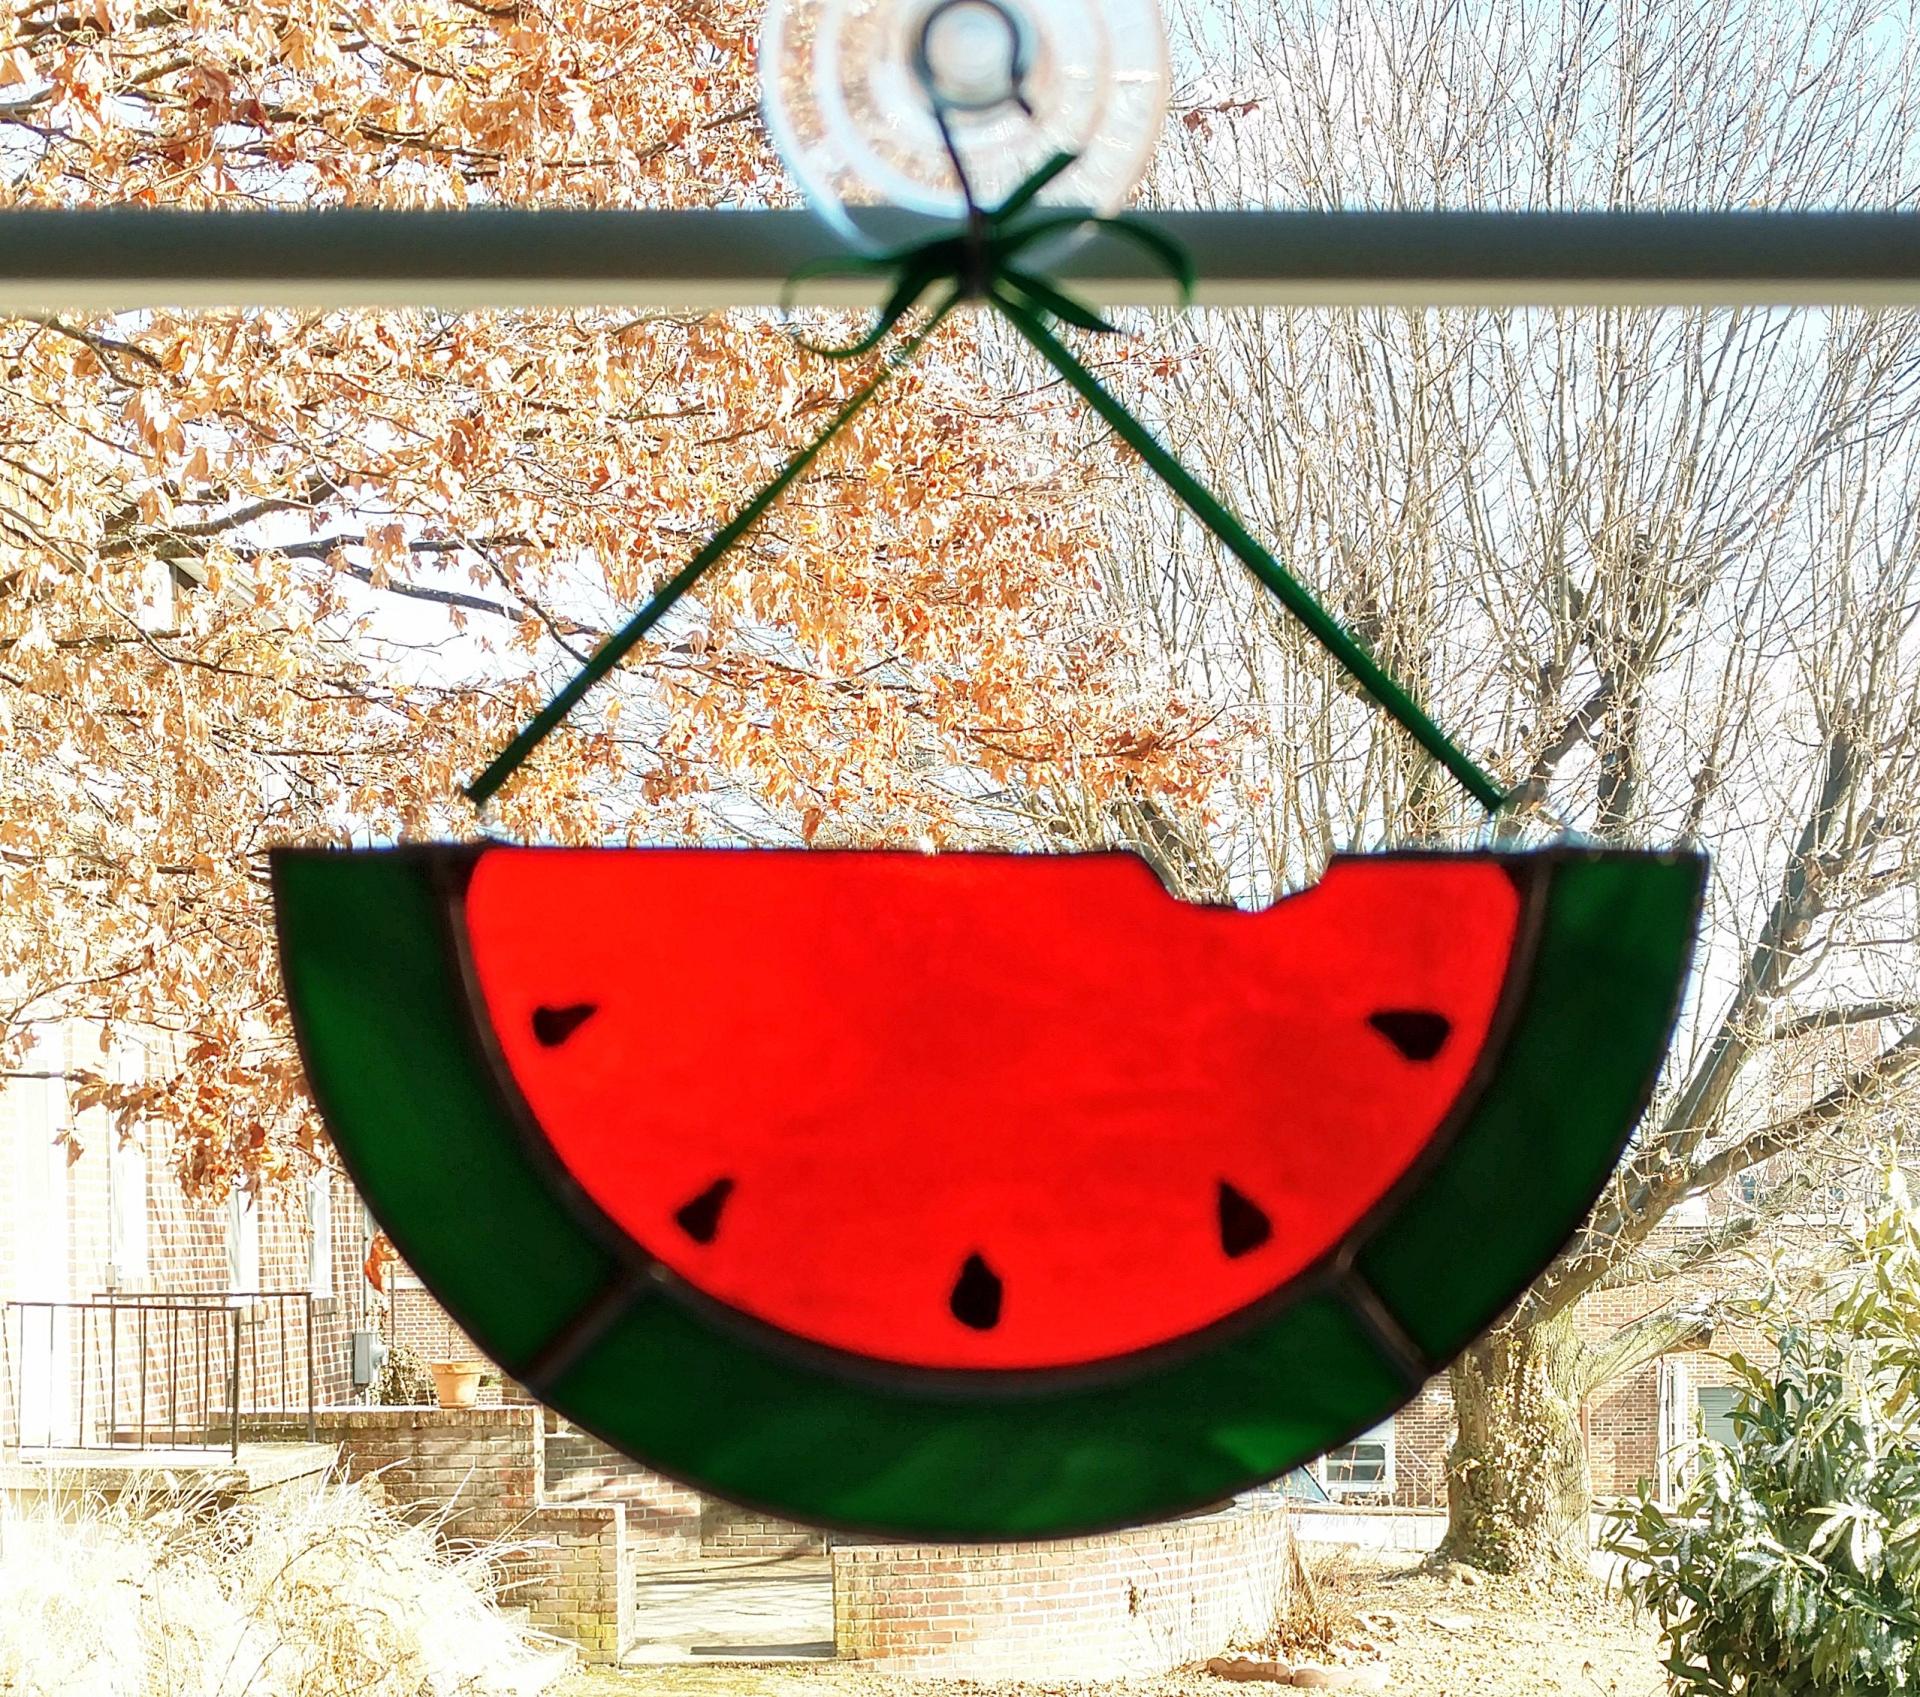 Stained Glass Watermelon Slice Suncatcher